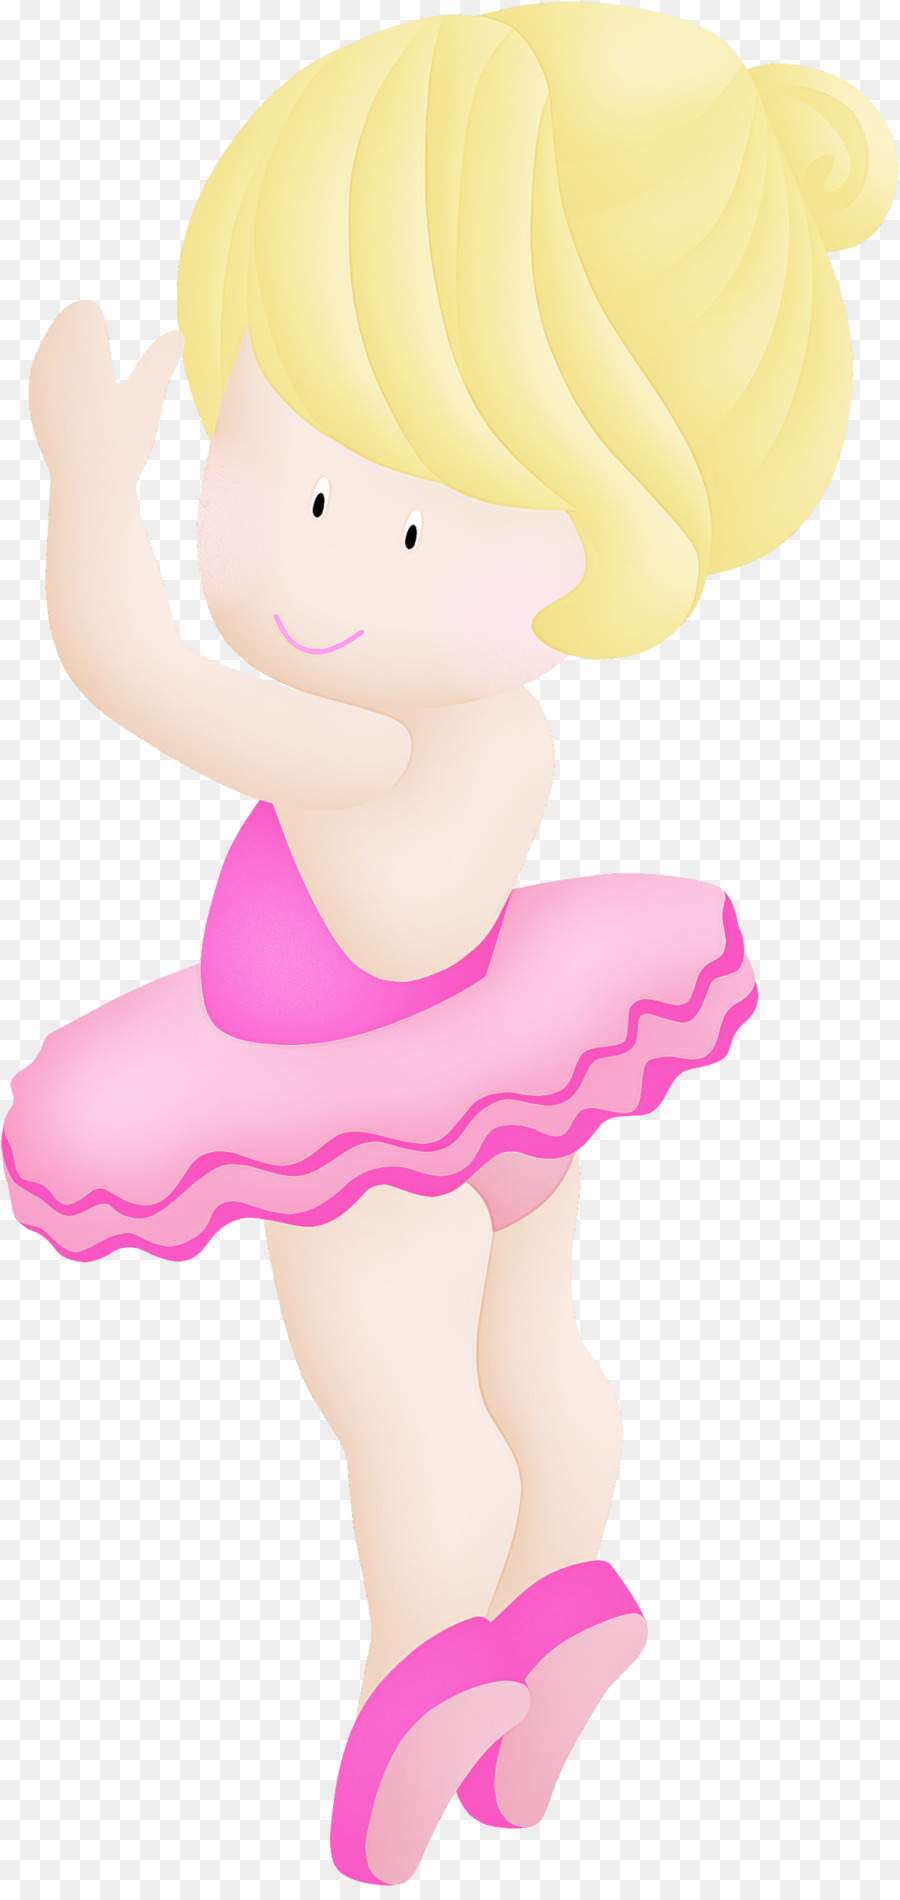 cartoon pink figurine costume animation